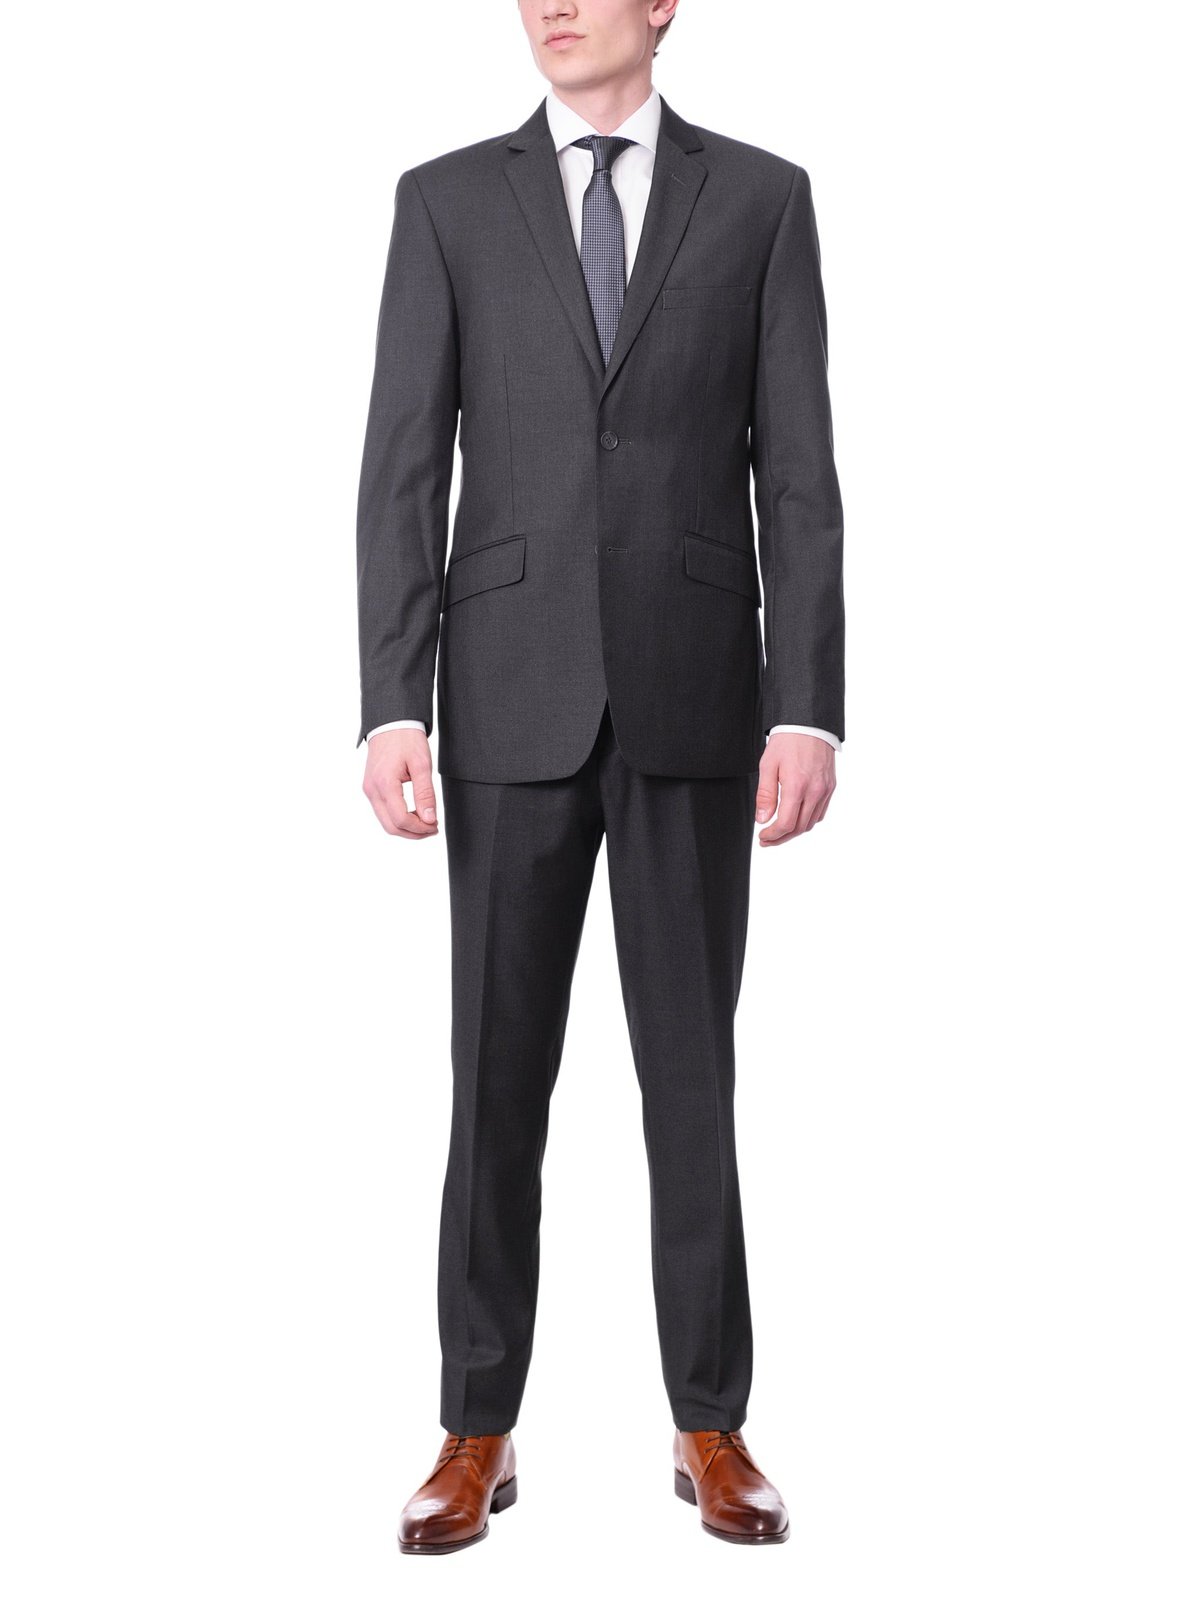 Raphael Bestselling Items Medium grey / 34R Raphael Slim Fit Solid Medium Gray Two Button Suit